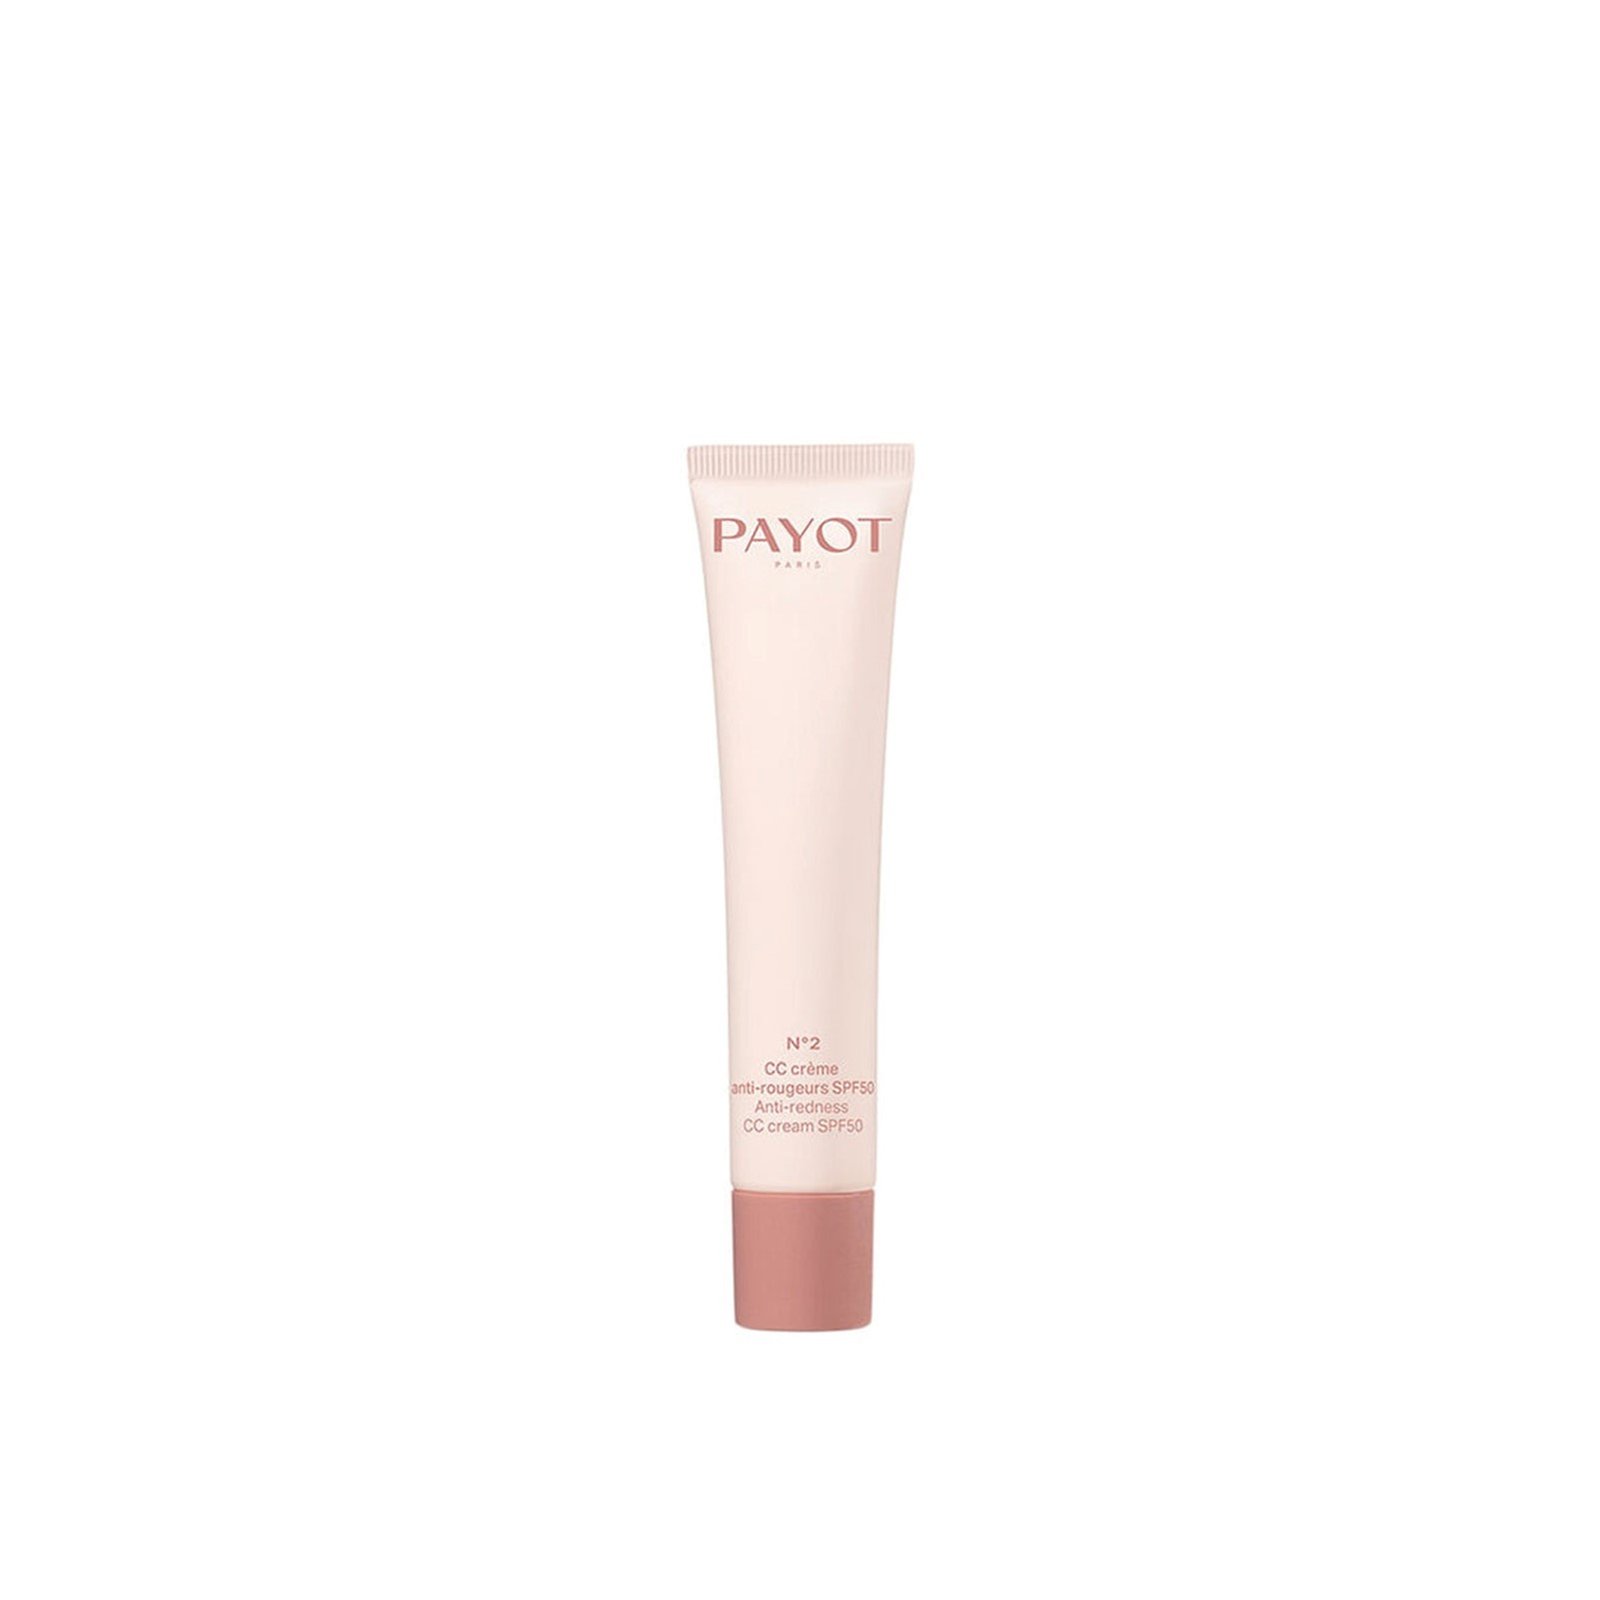 Payot Crème Nº2 CC Cream Anti-Redness SPF50+ Universal Shade 40ml (1.3 fl oz)